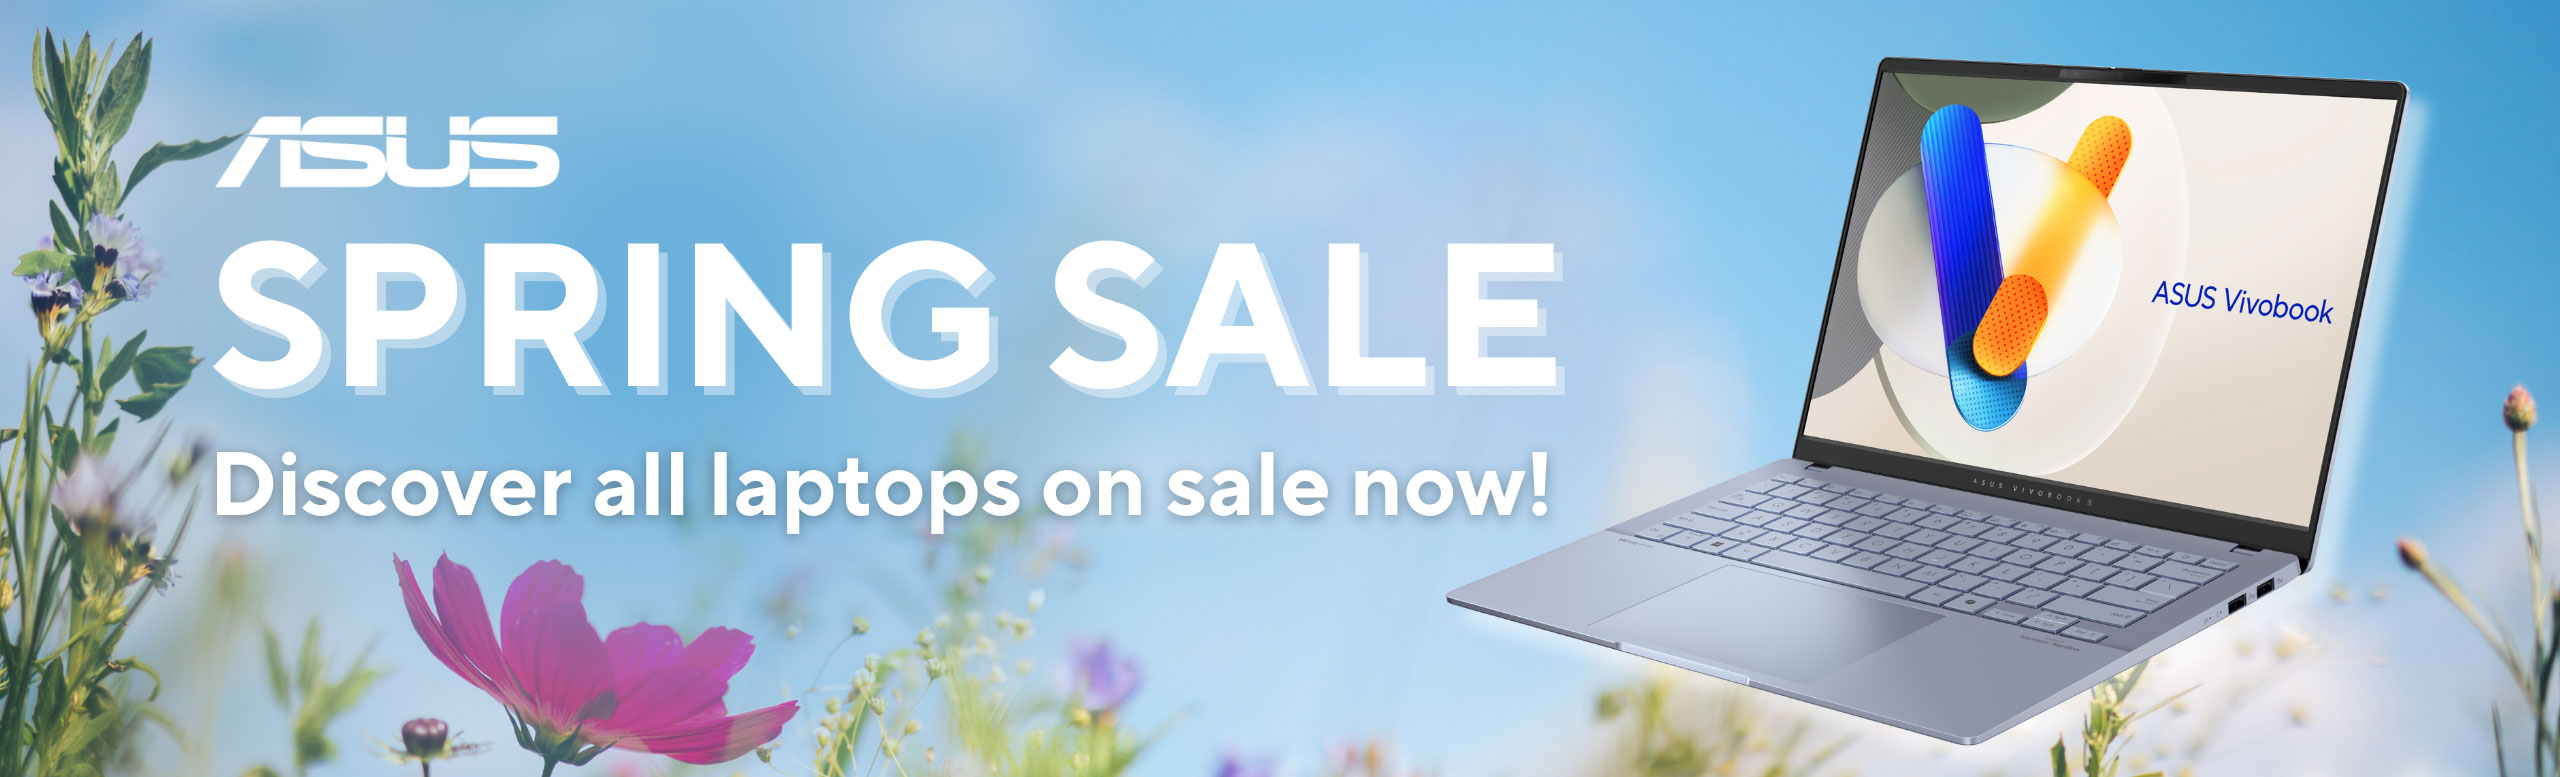 Spring Promo Alert: Unbeatable Deals on ASUS Laptops!